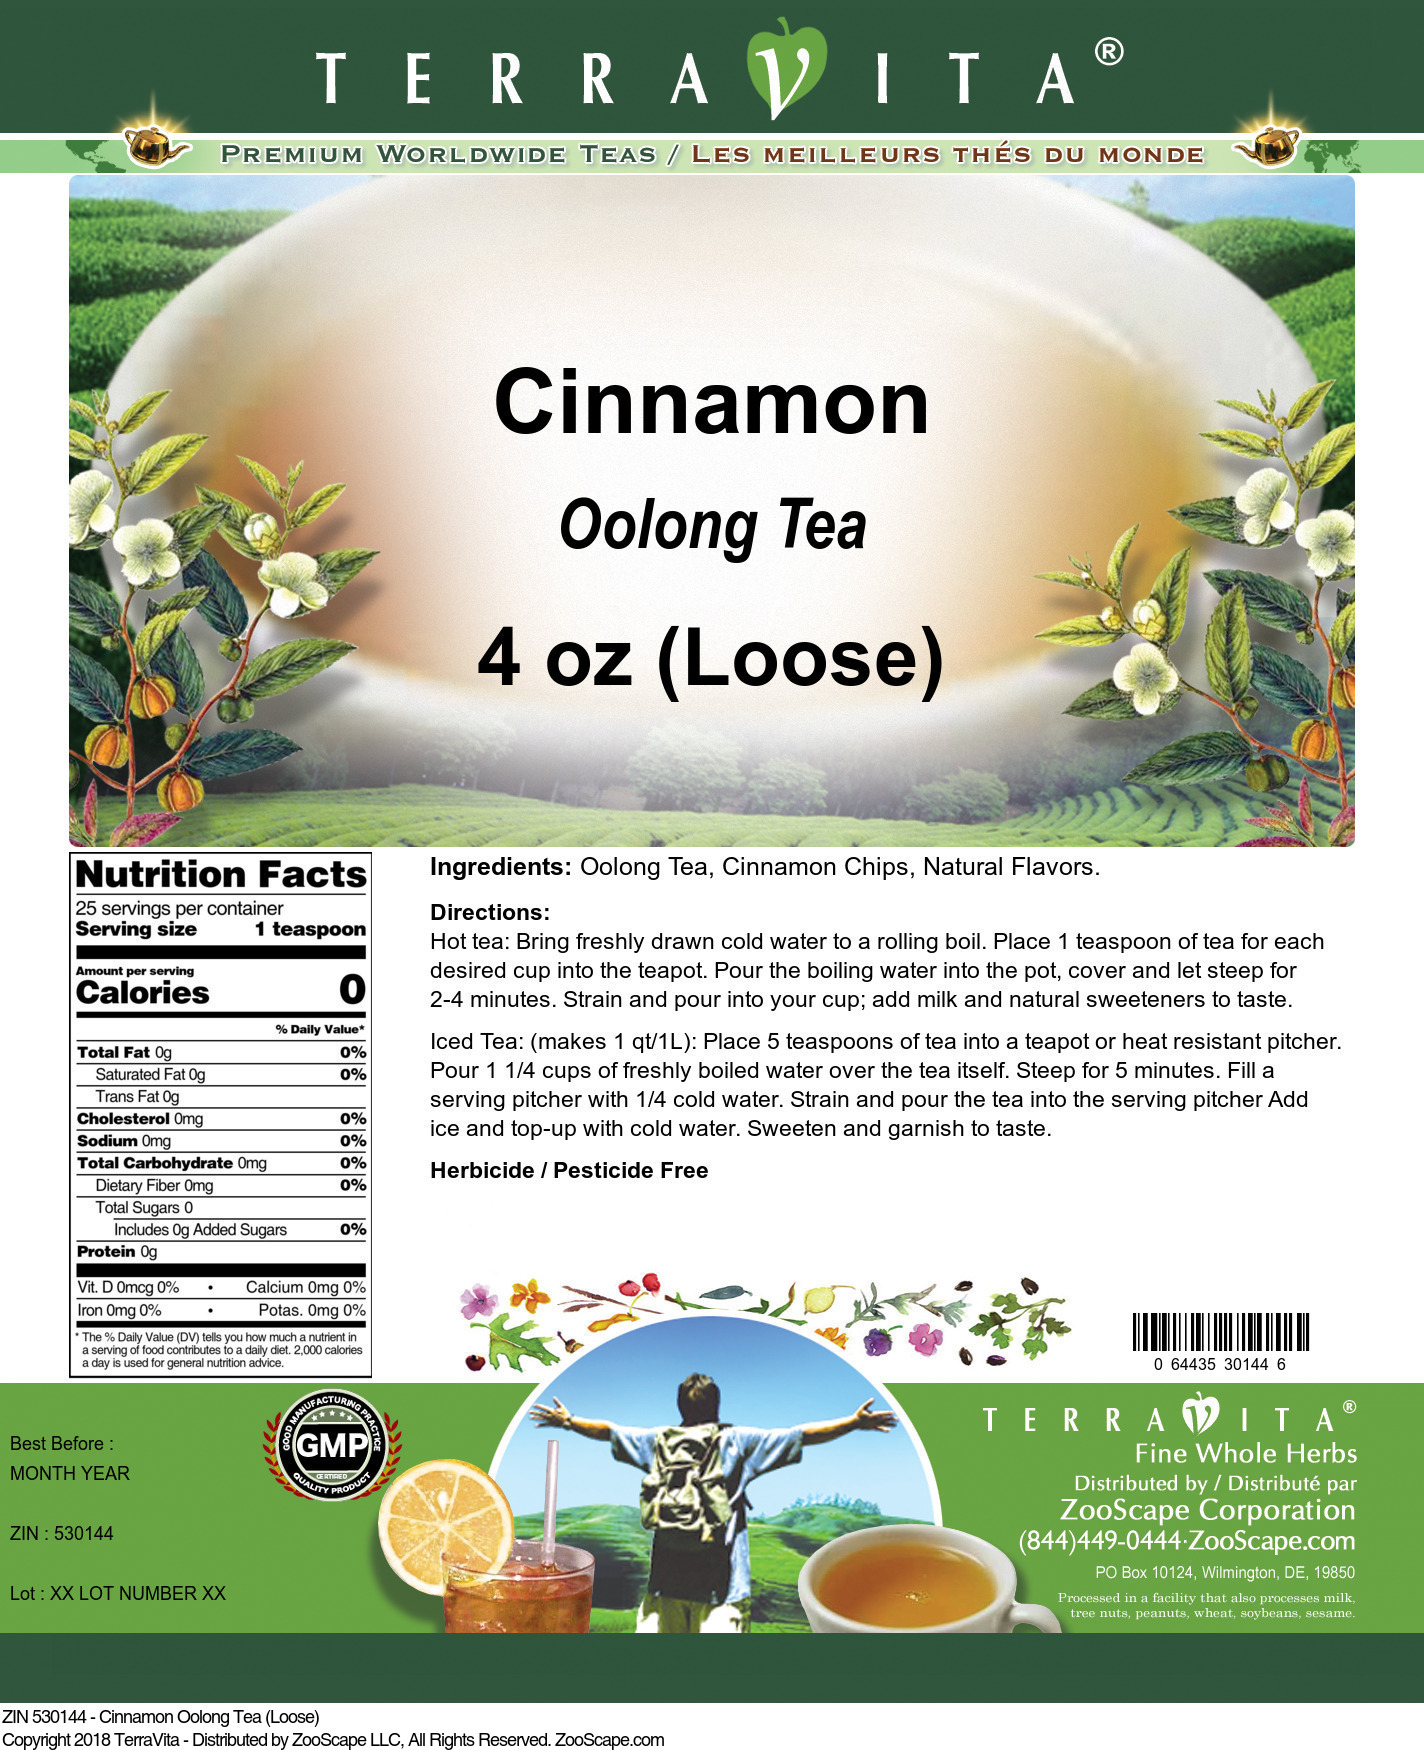 Cinnamon Oolong Tea (Loose) - Label